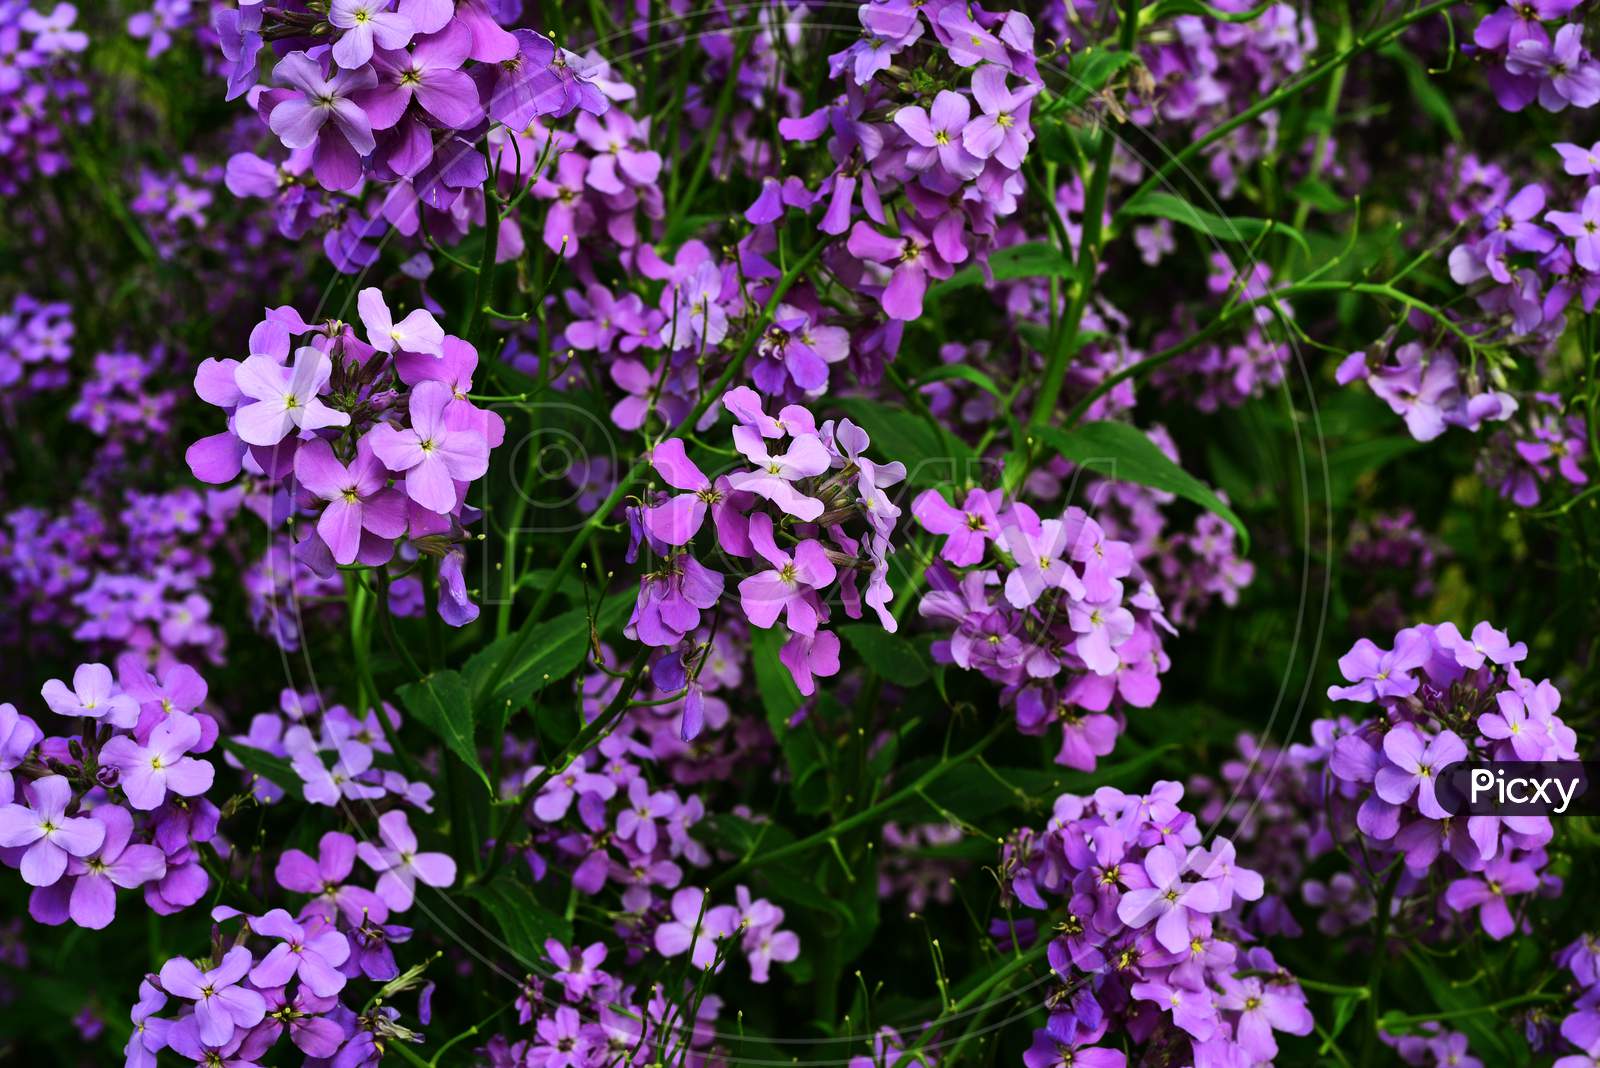 Violet and purple  wallflowers